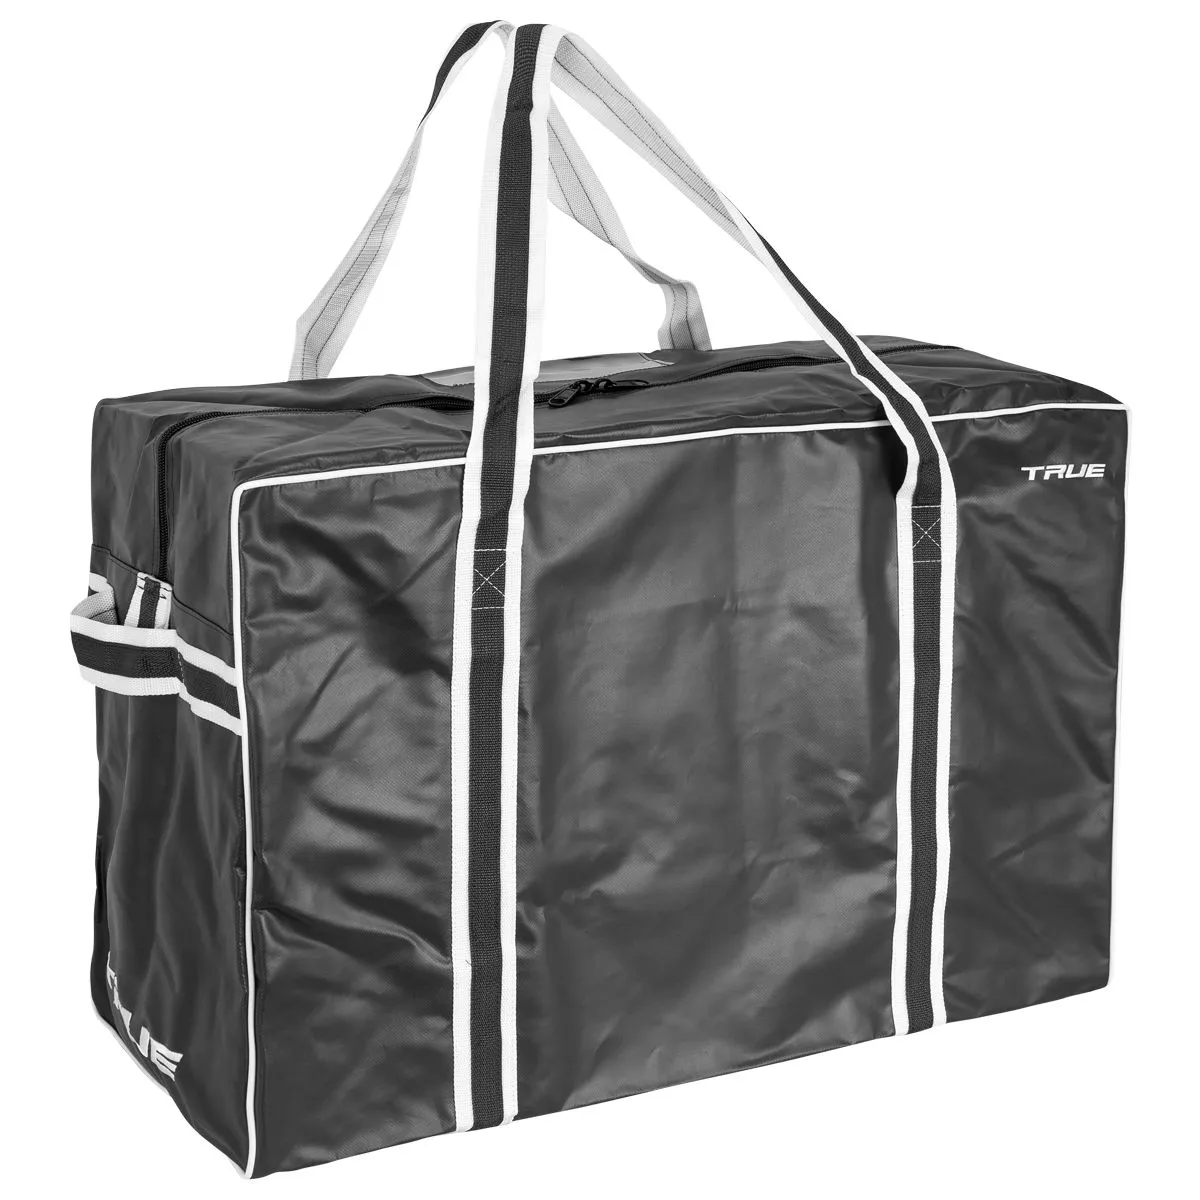 TRUE Pro Junior Carry Equipment Bag